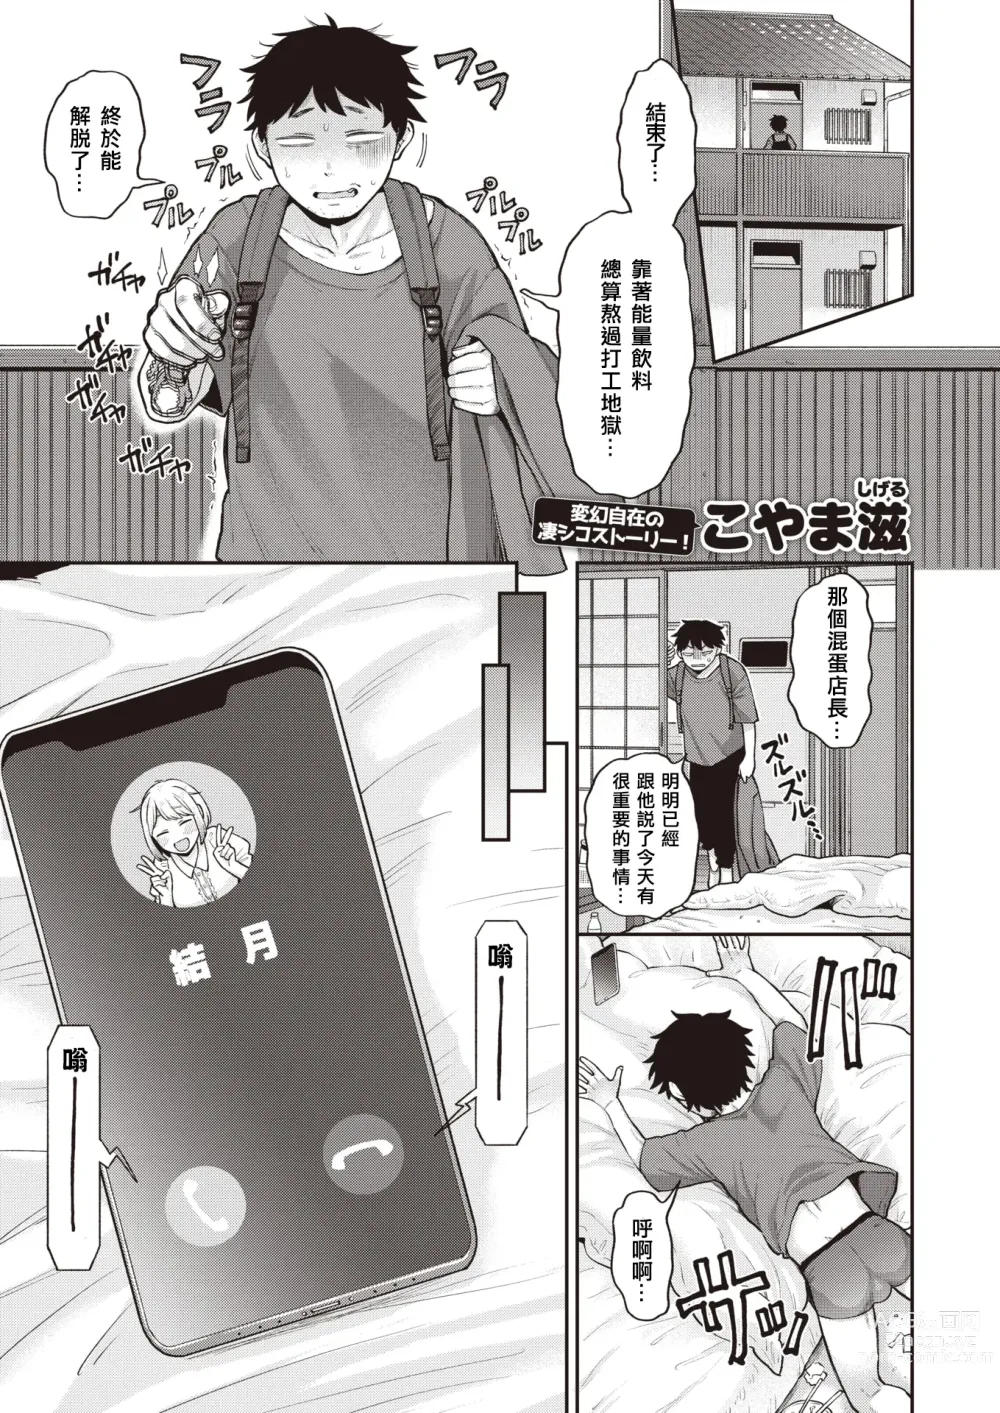 Page 1 of manga Okitetteba!